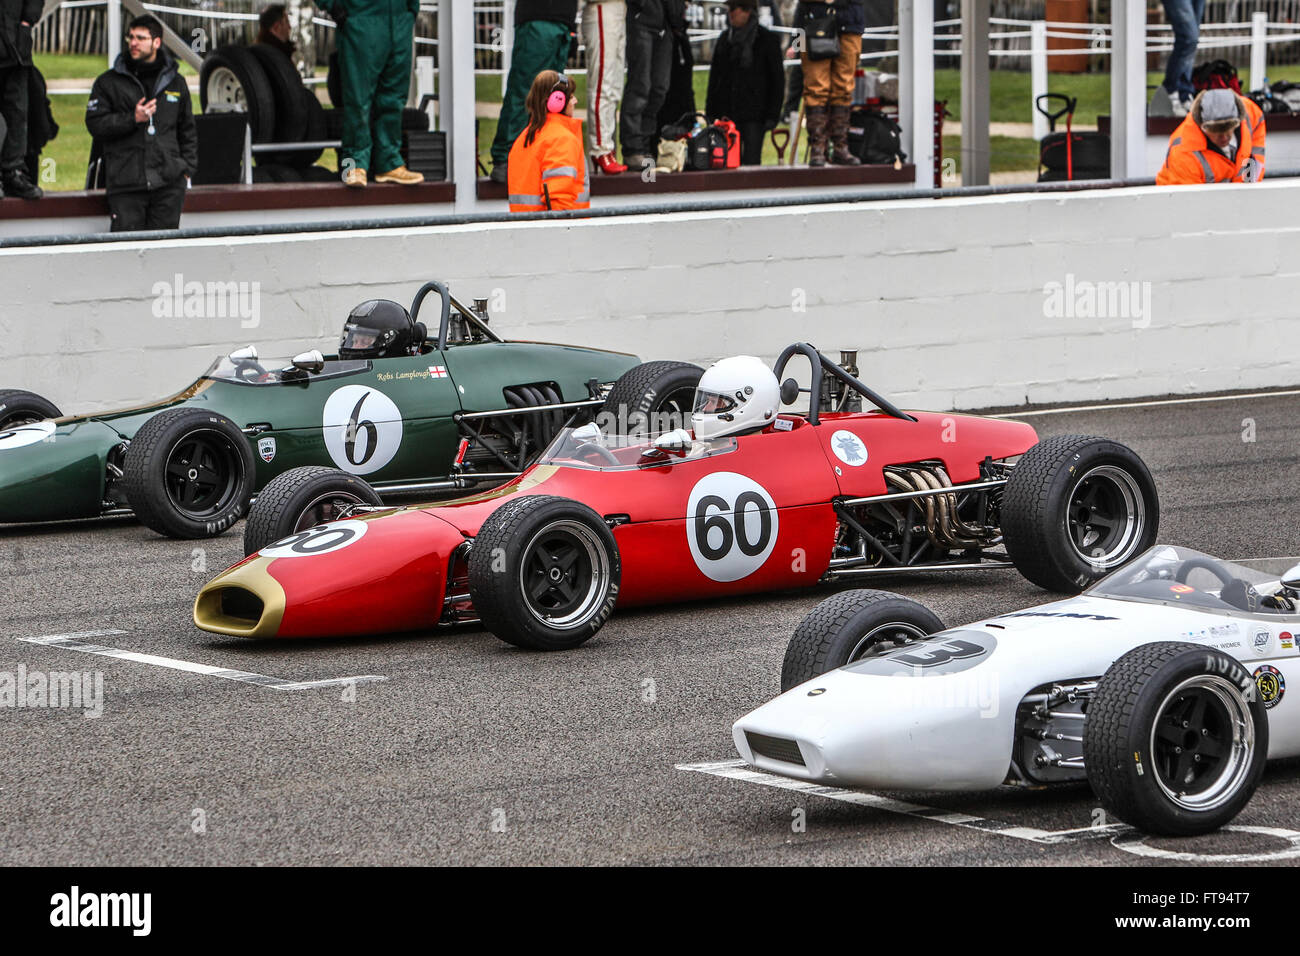 Goodwood classic historic motor racing at the Goodwood Members Meeting Stock Photo